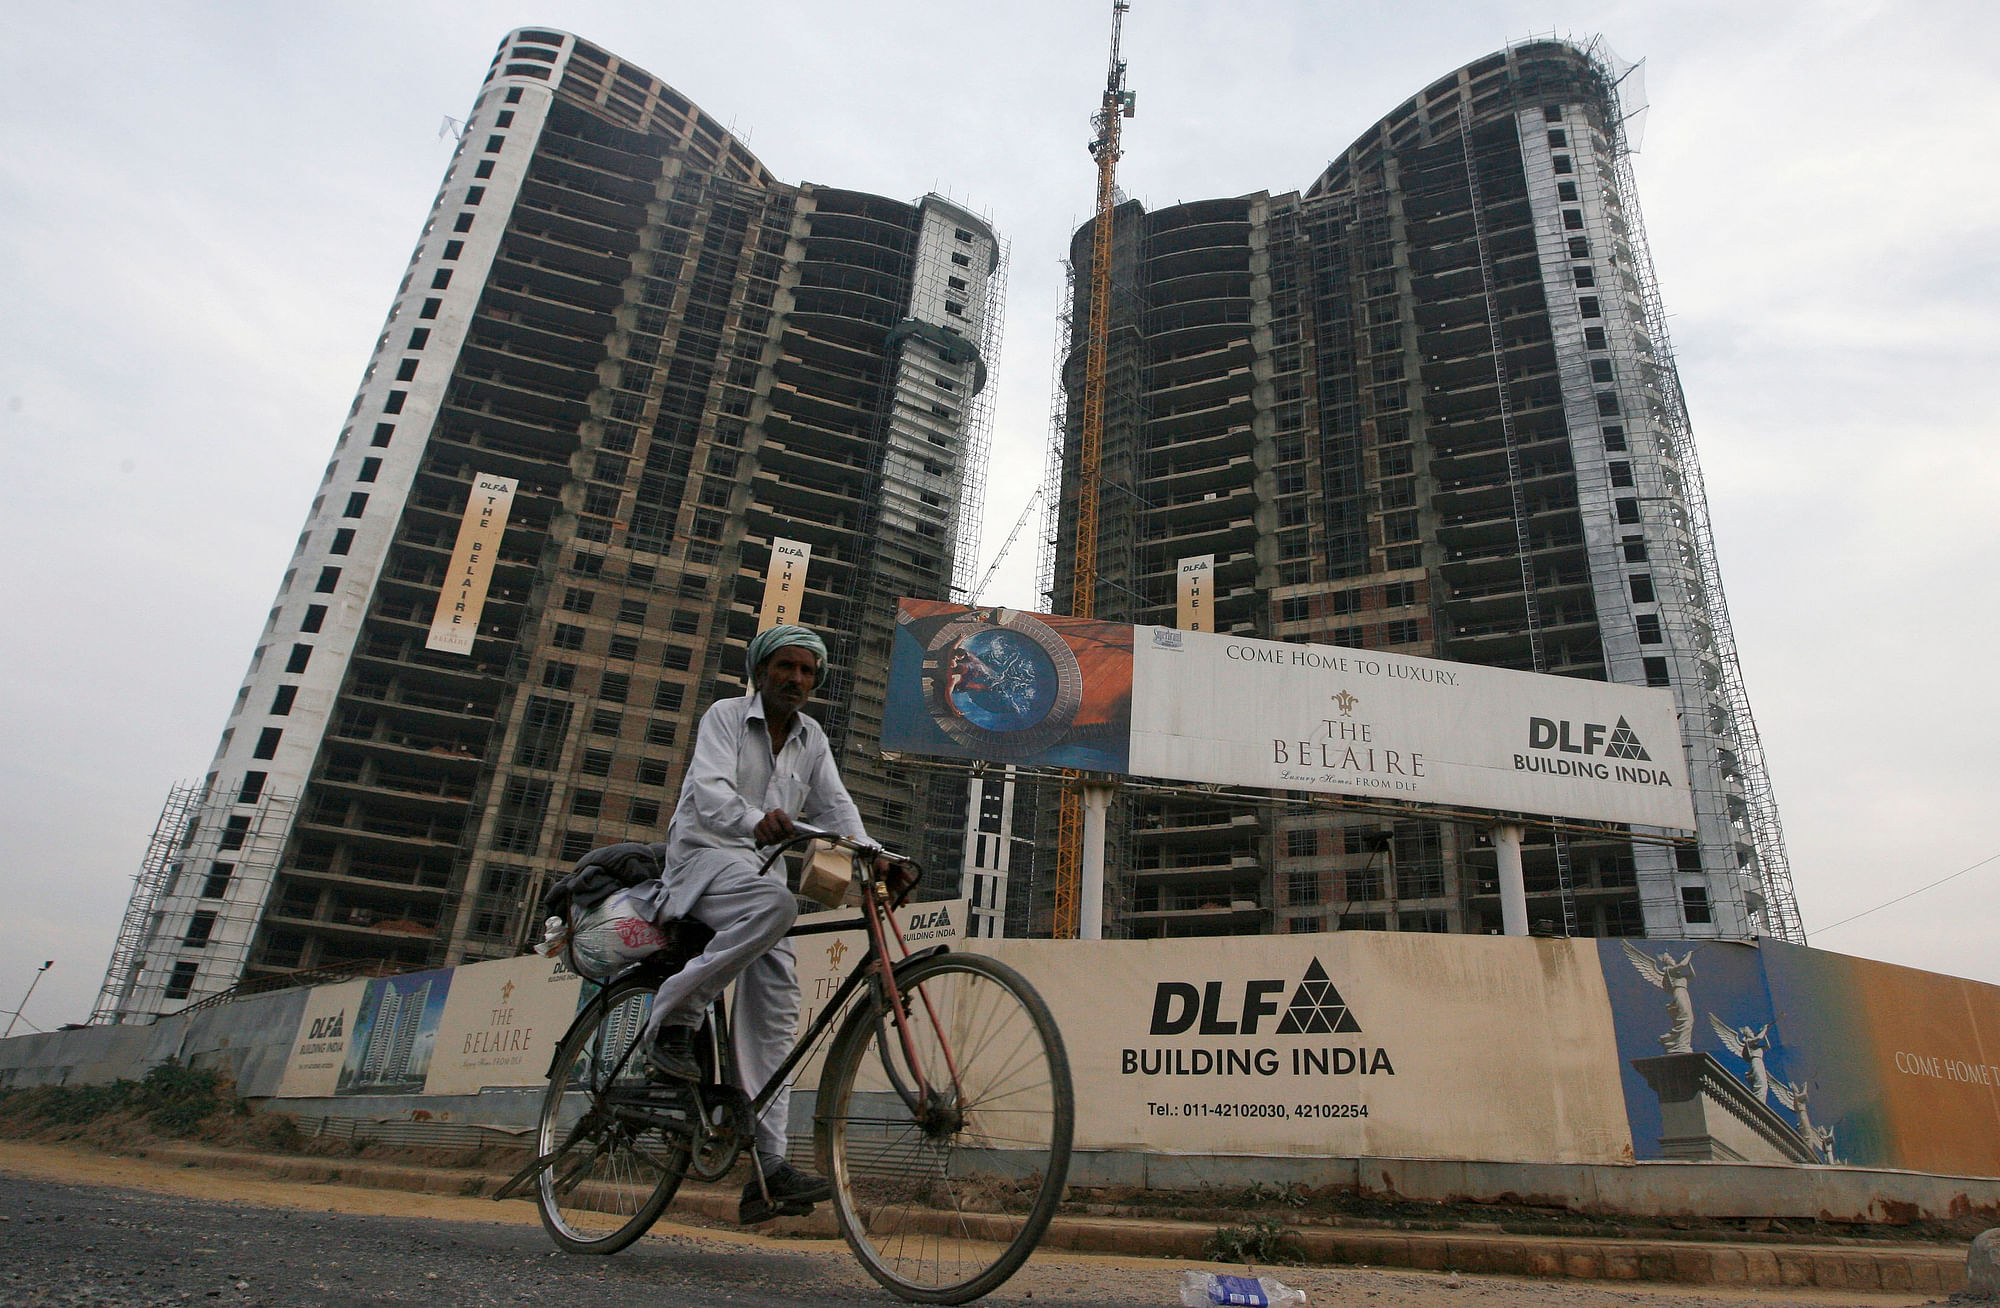  DLF construction site in Gurgaon.&nbsp;